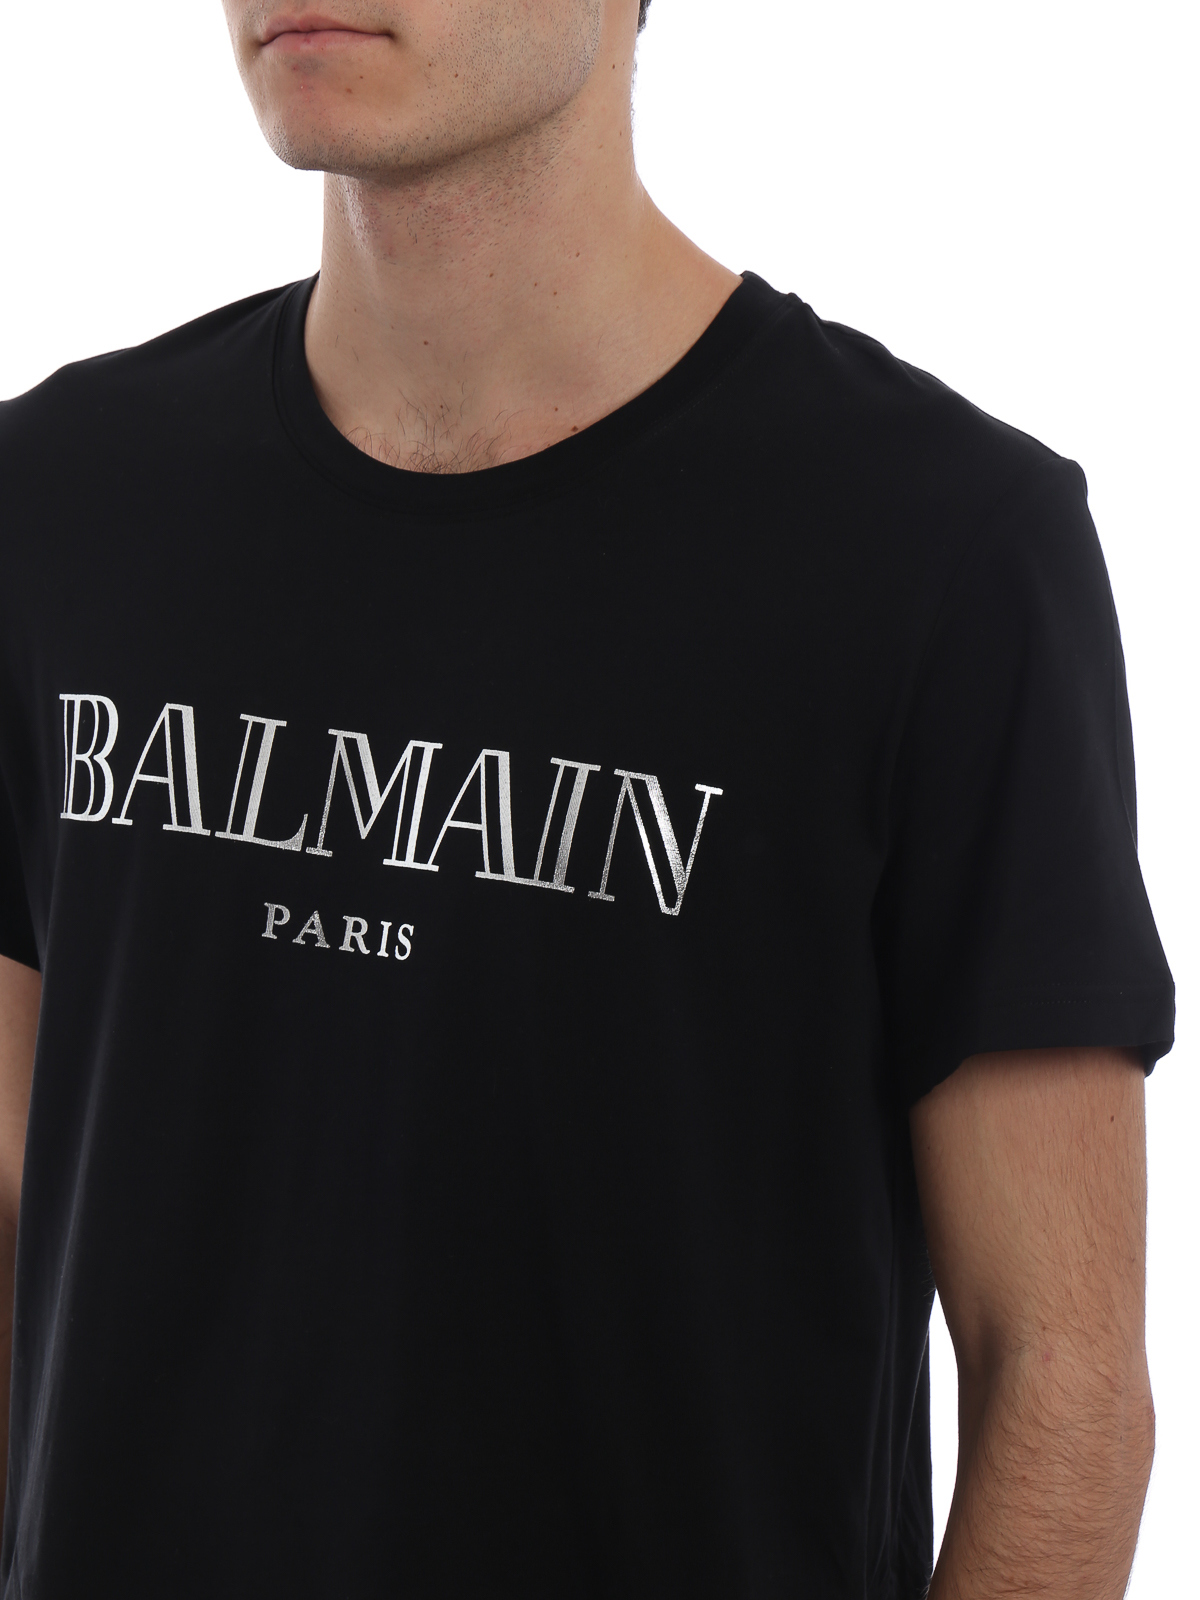 T-shirts - Paris silver print black T-shirt - W8H8601I2581766